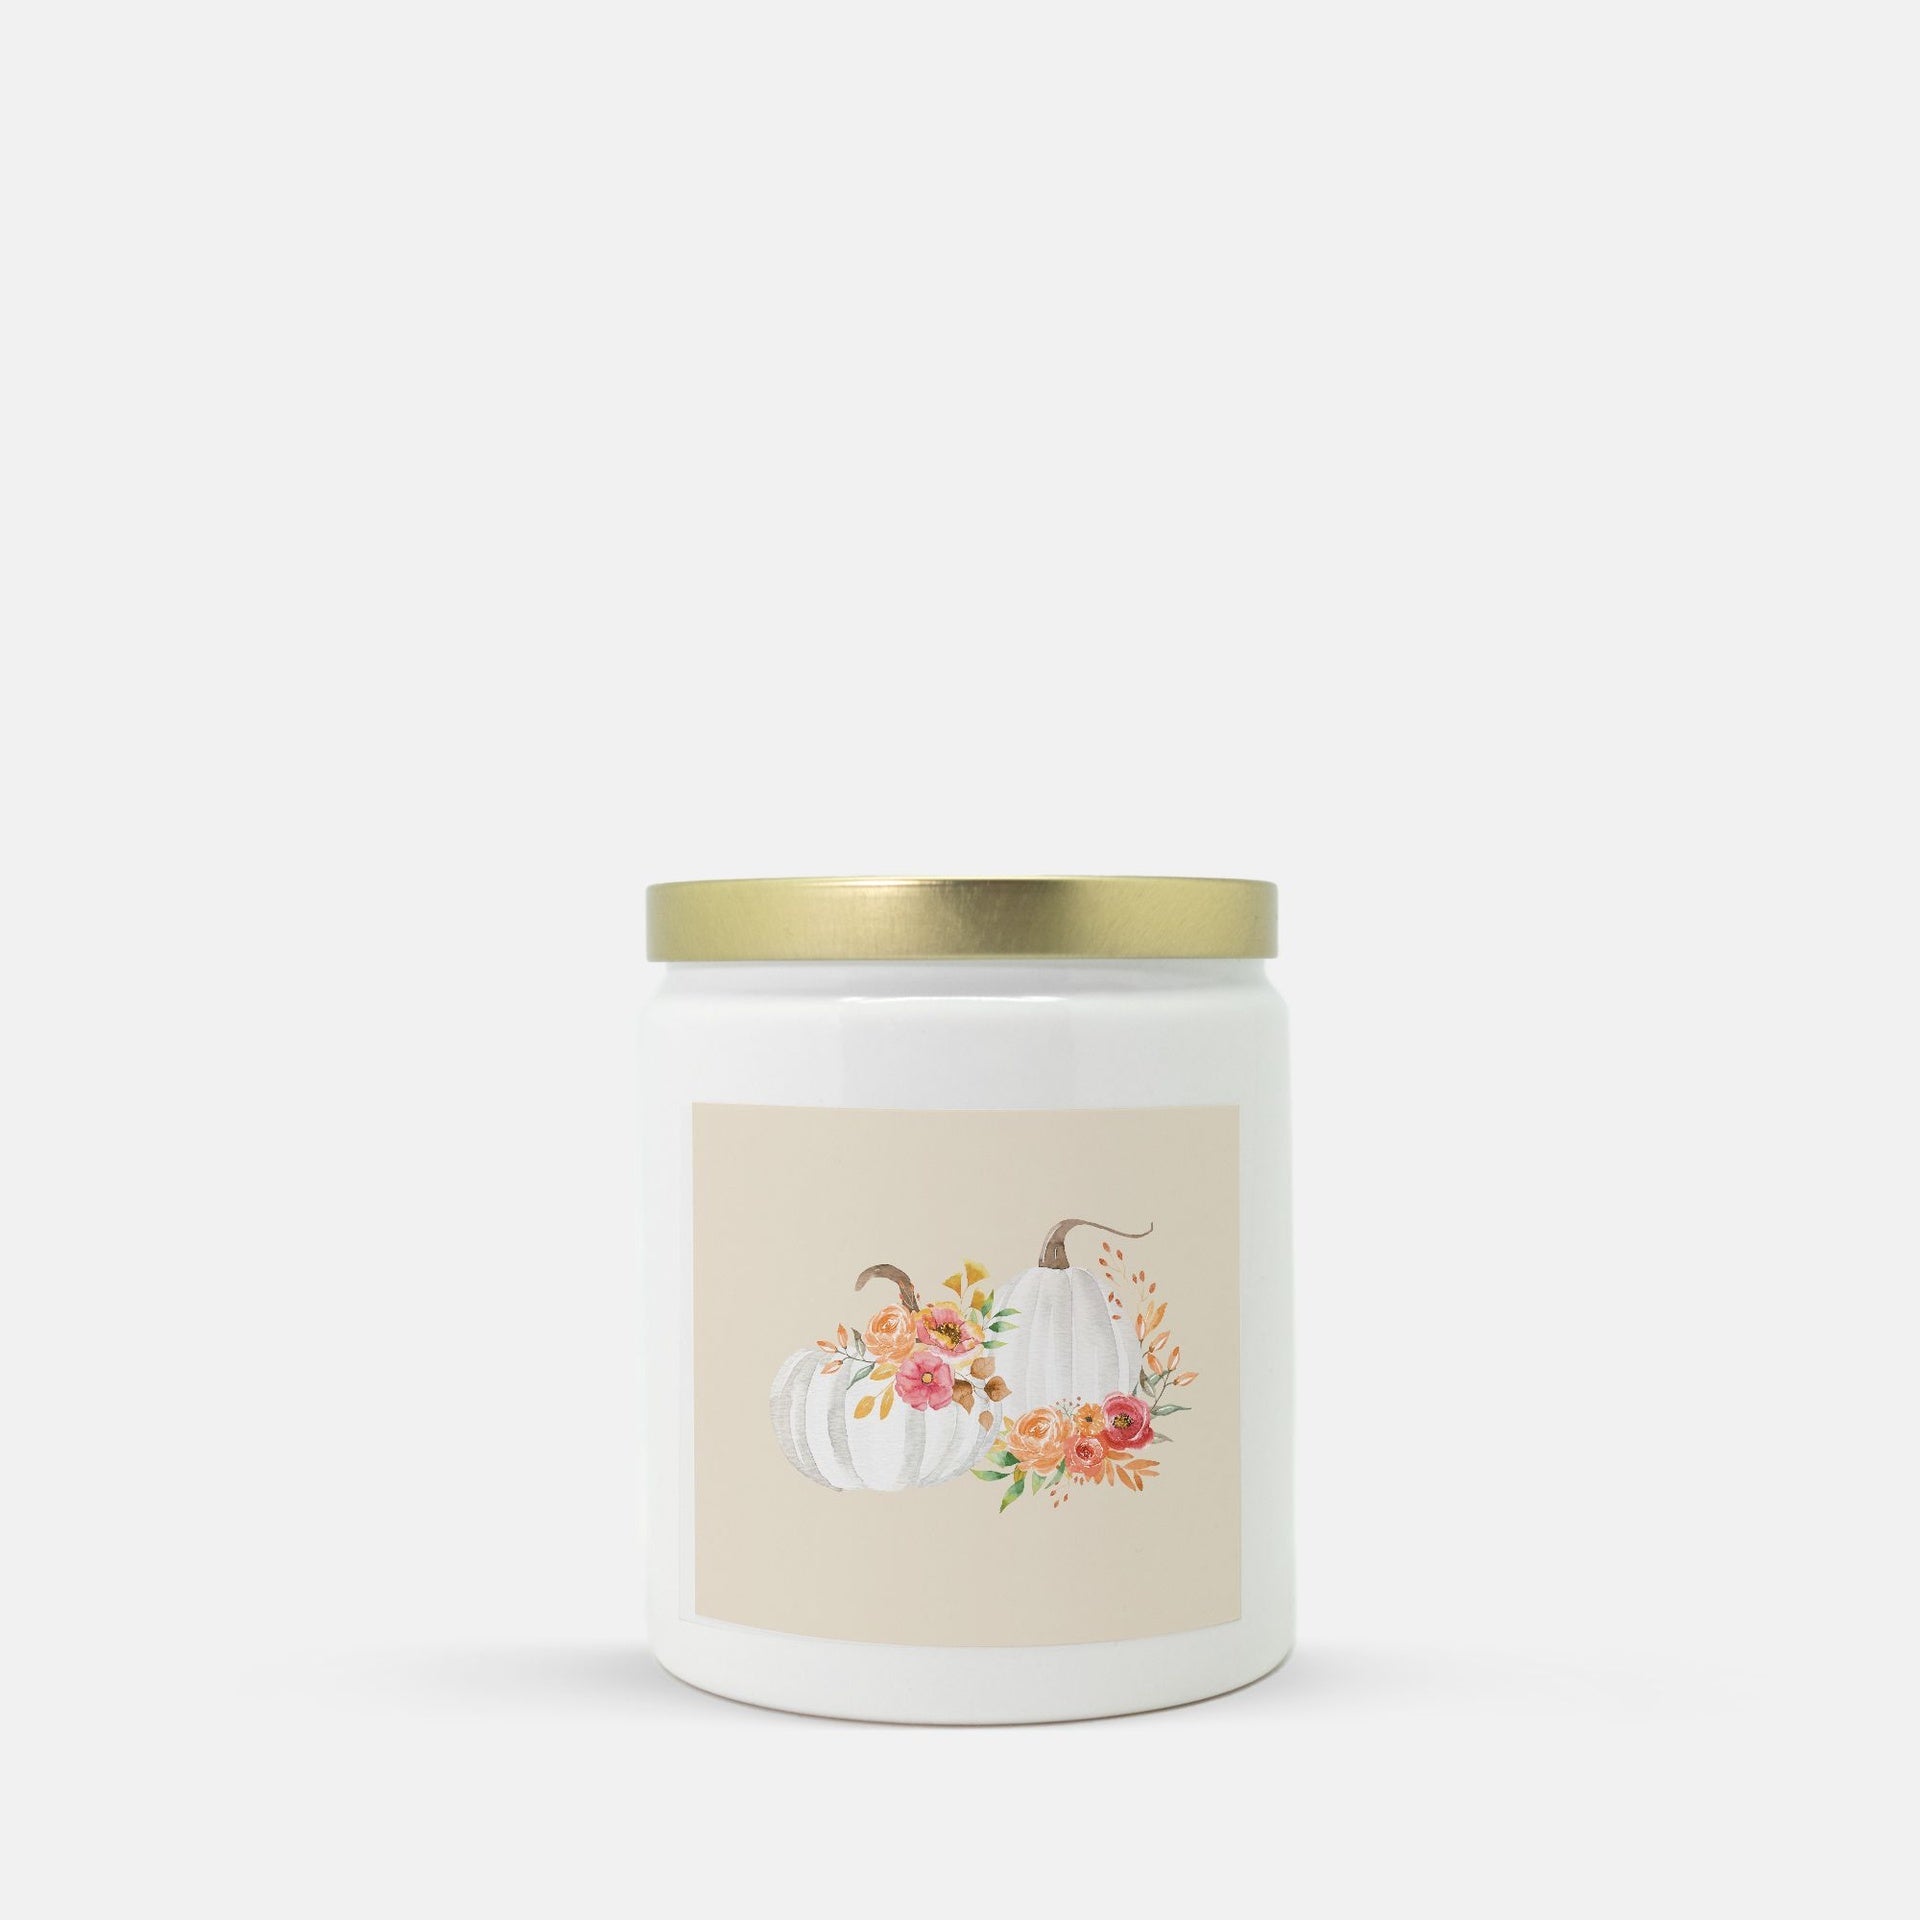 Lifestyle Details - White Pumpkins Watercolor Ceramic Candle w Gold Lid - Vanilla Bean